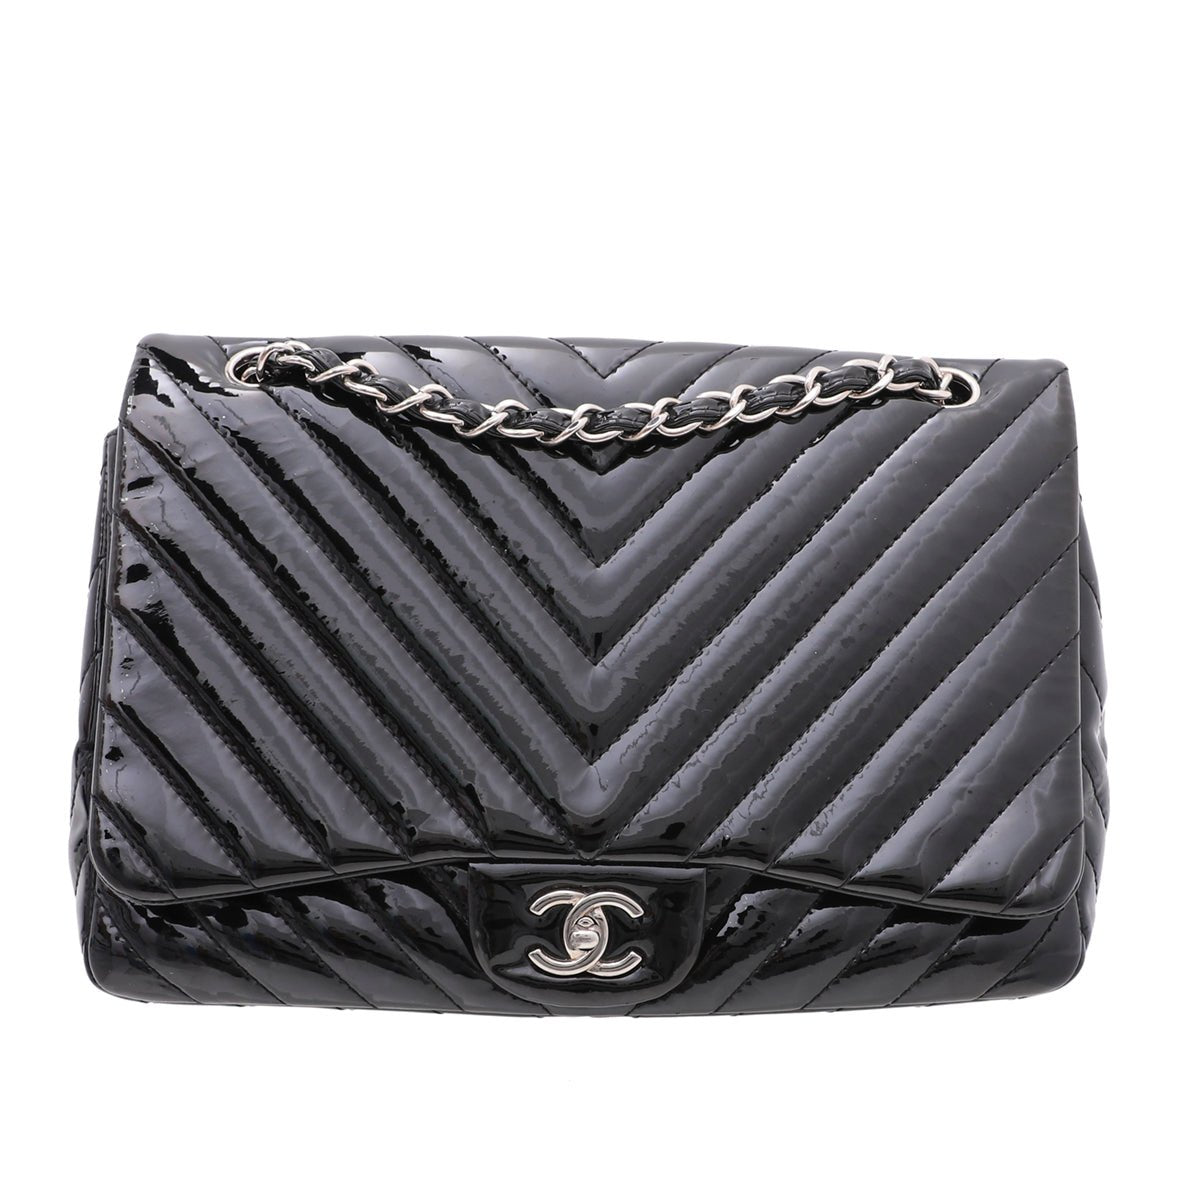 The Closet - Chanel Black CC Chevron Single Flap Jumbo Bag | The Closet